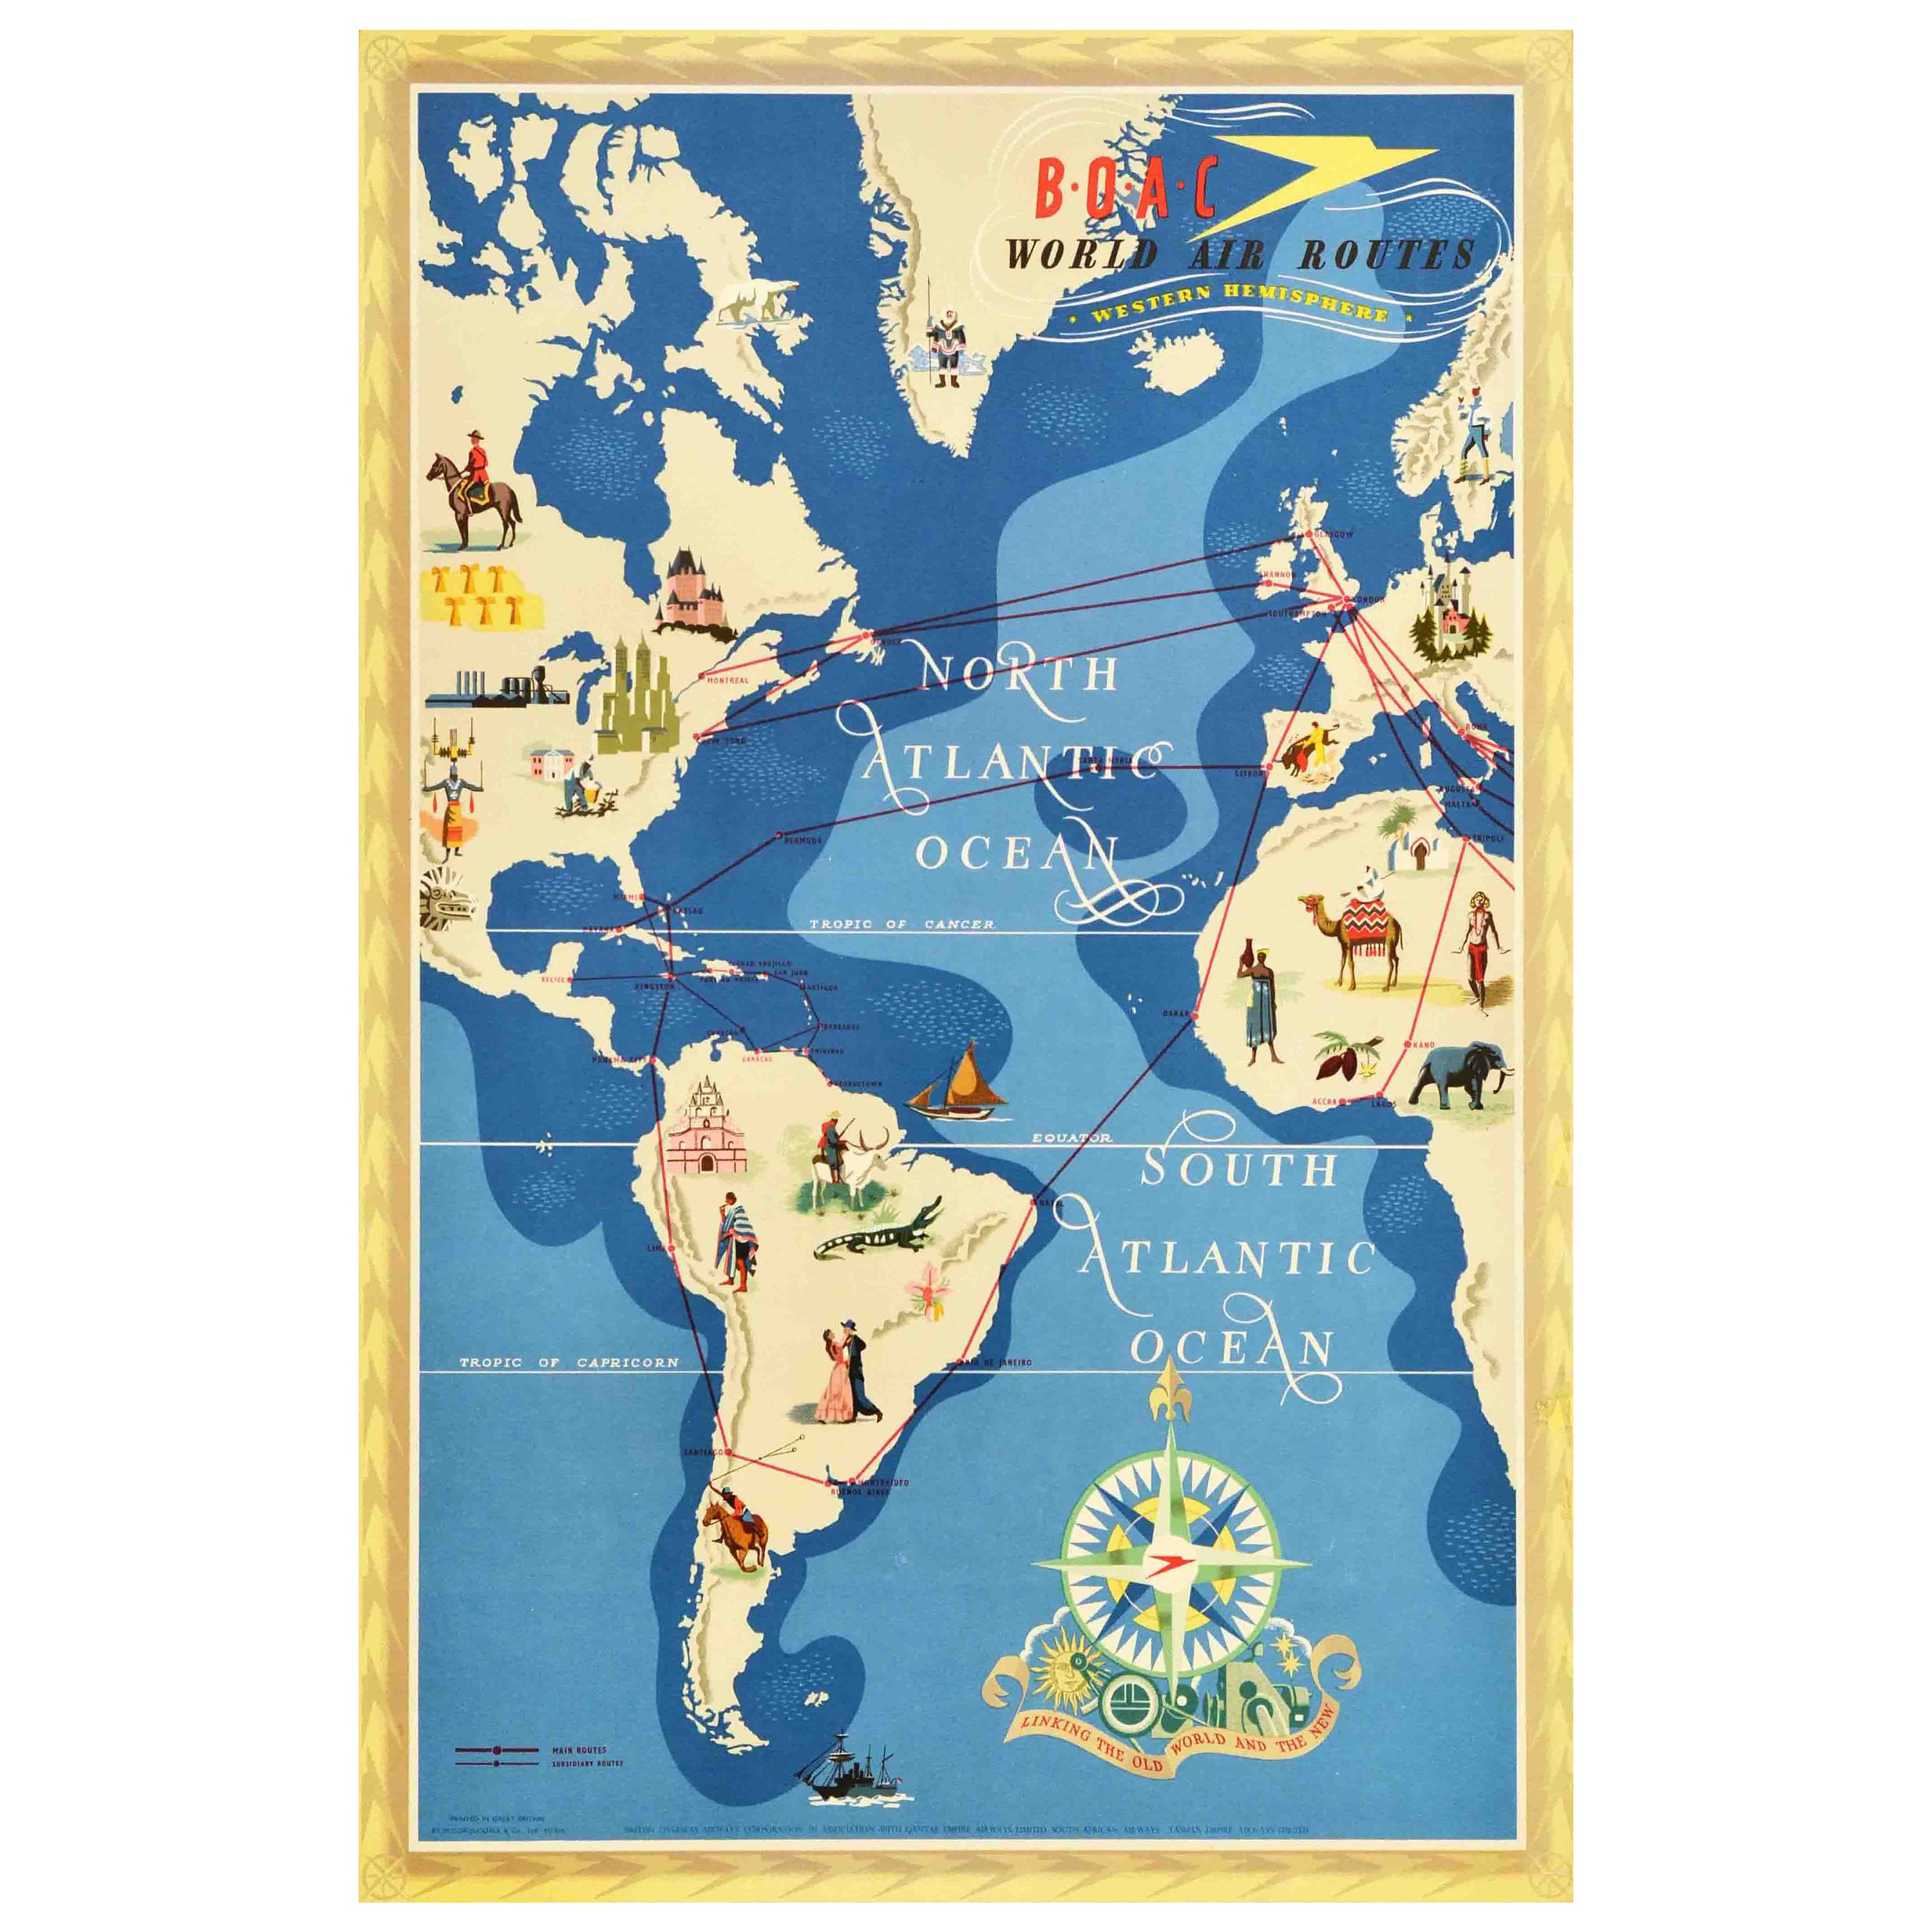 Original Vintage Travel Poster BOAC World Air Routes Western Hemisphere Design